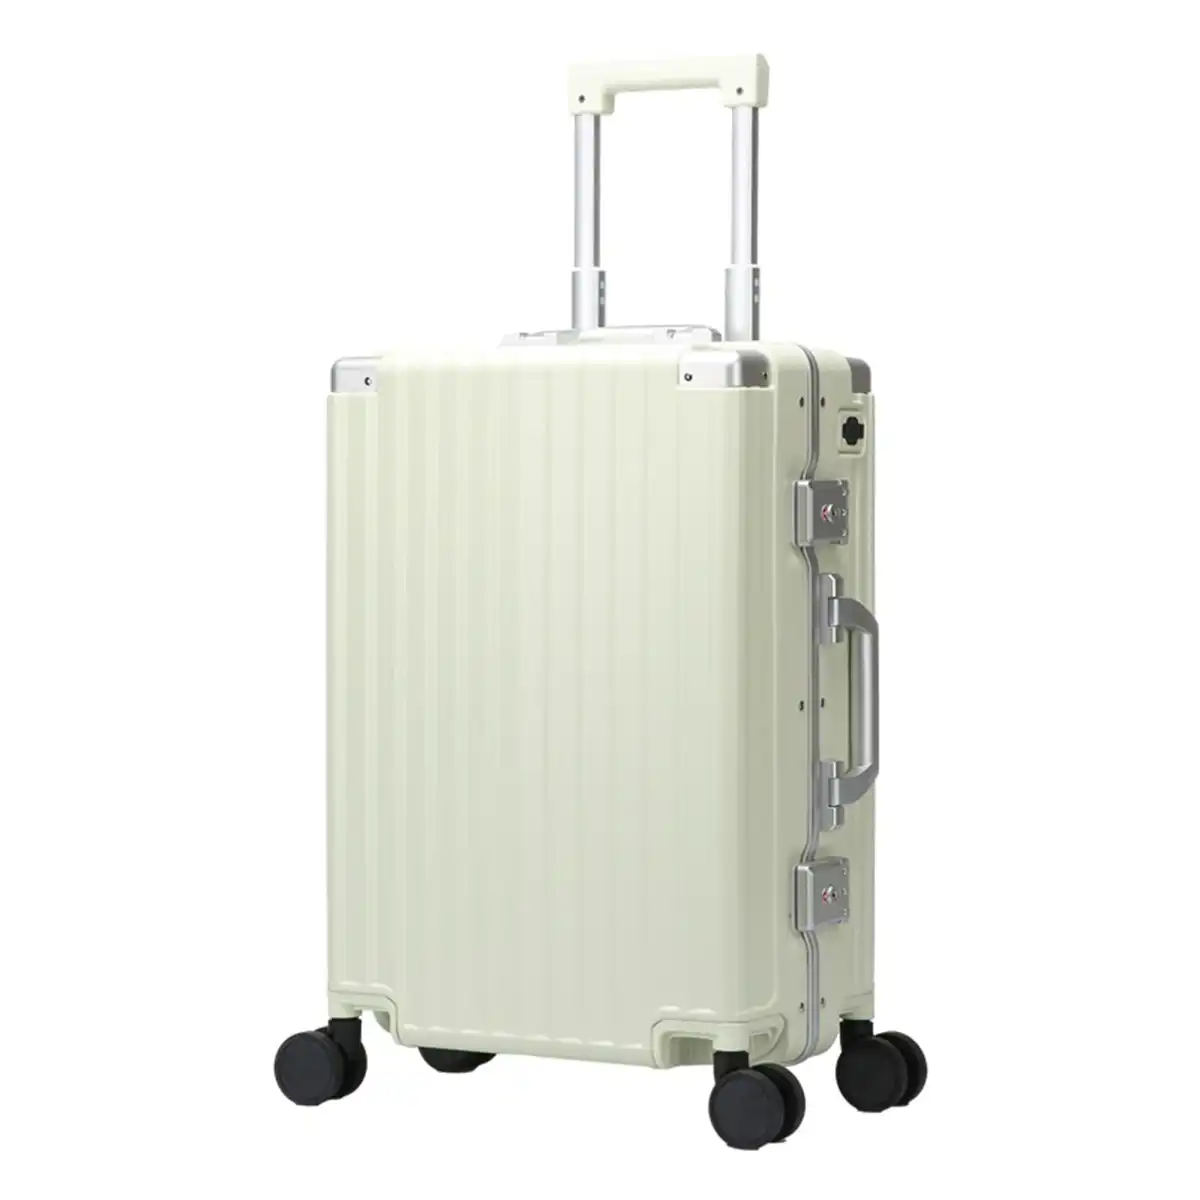 Bopai Aluminium Frame Luggage Suitcase Lightweight with TSA locker 8 wheels HardCase B9203